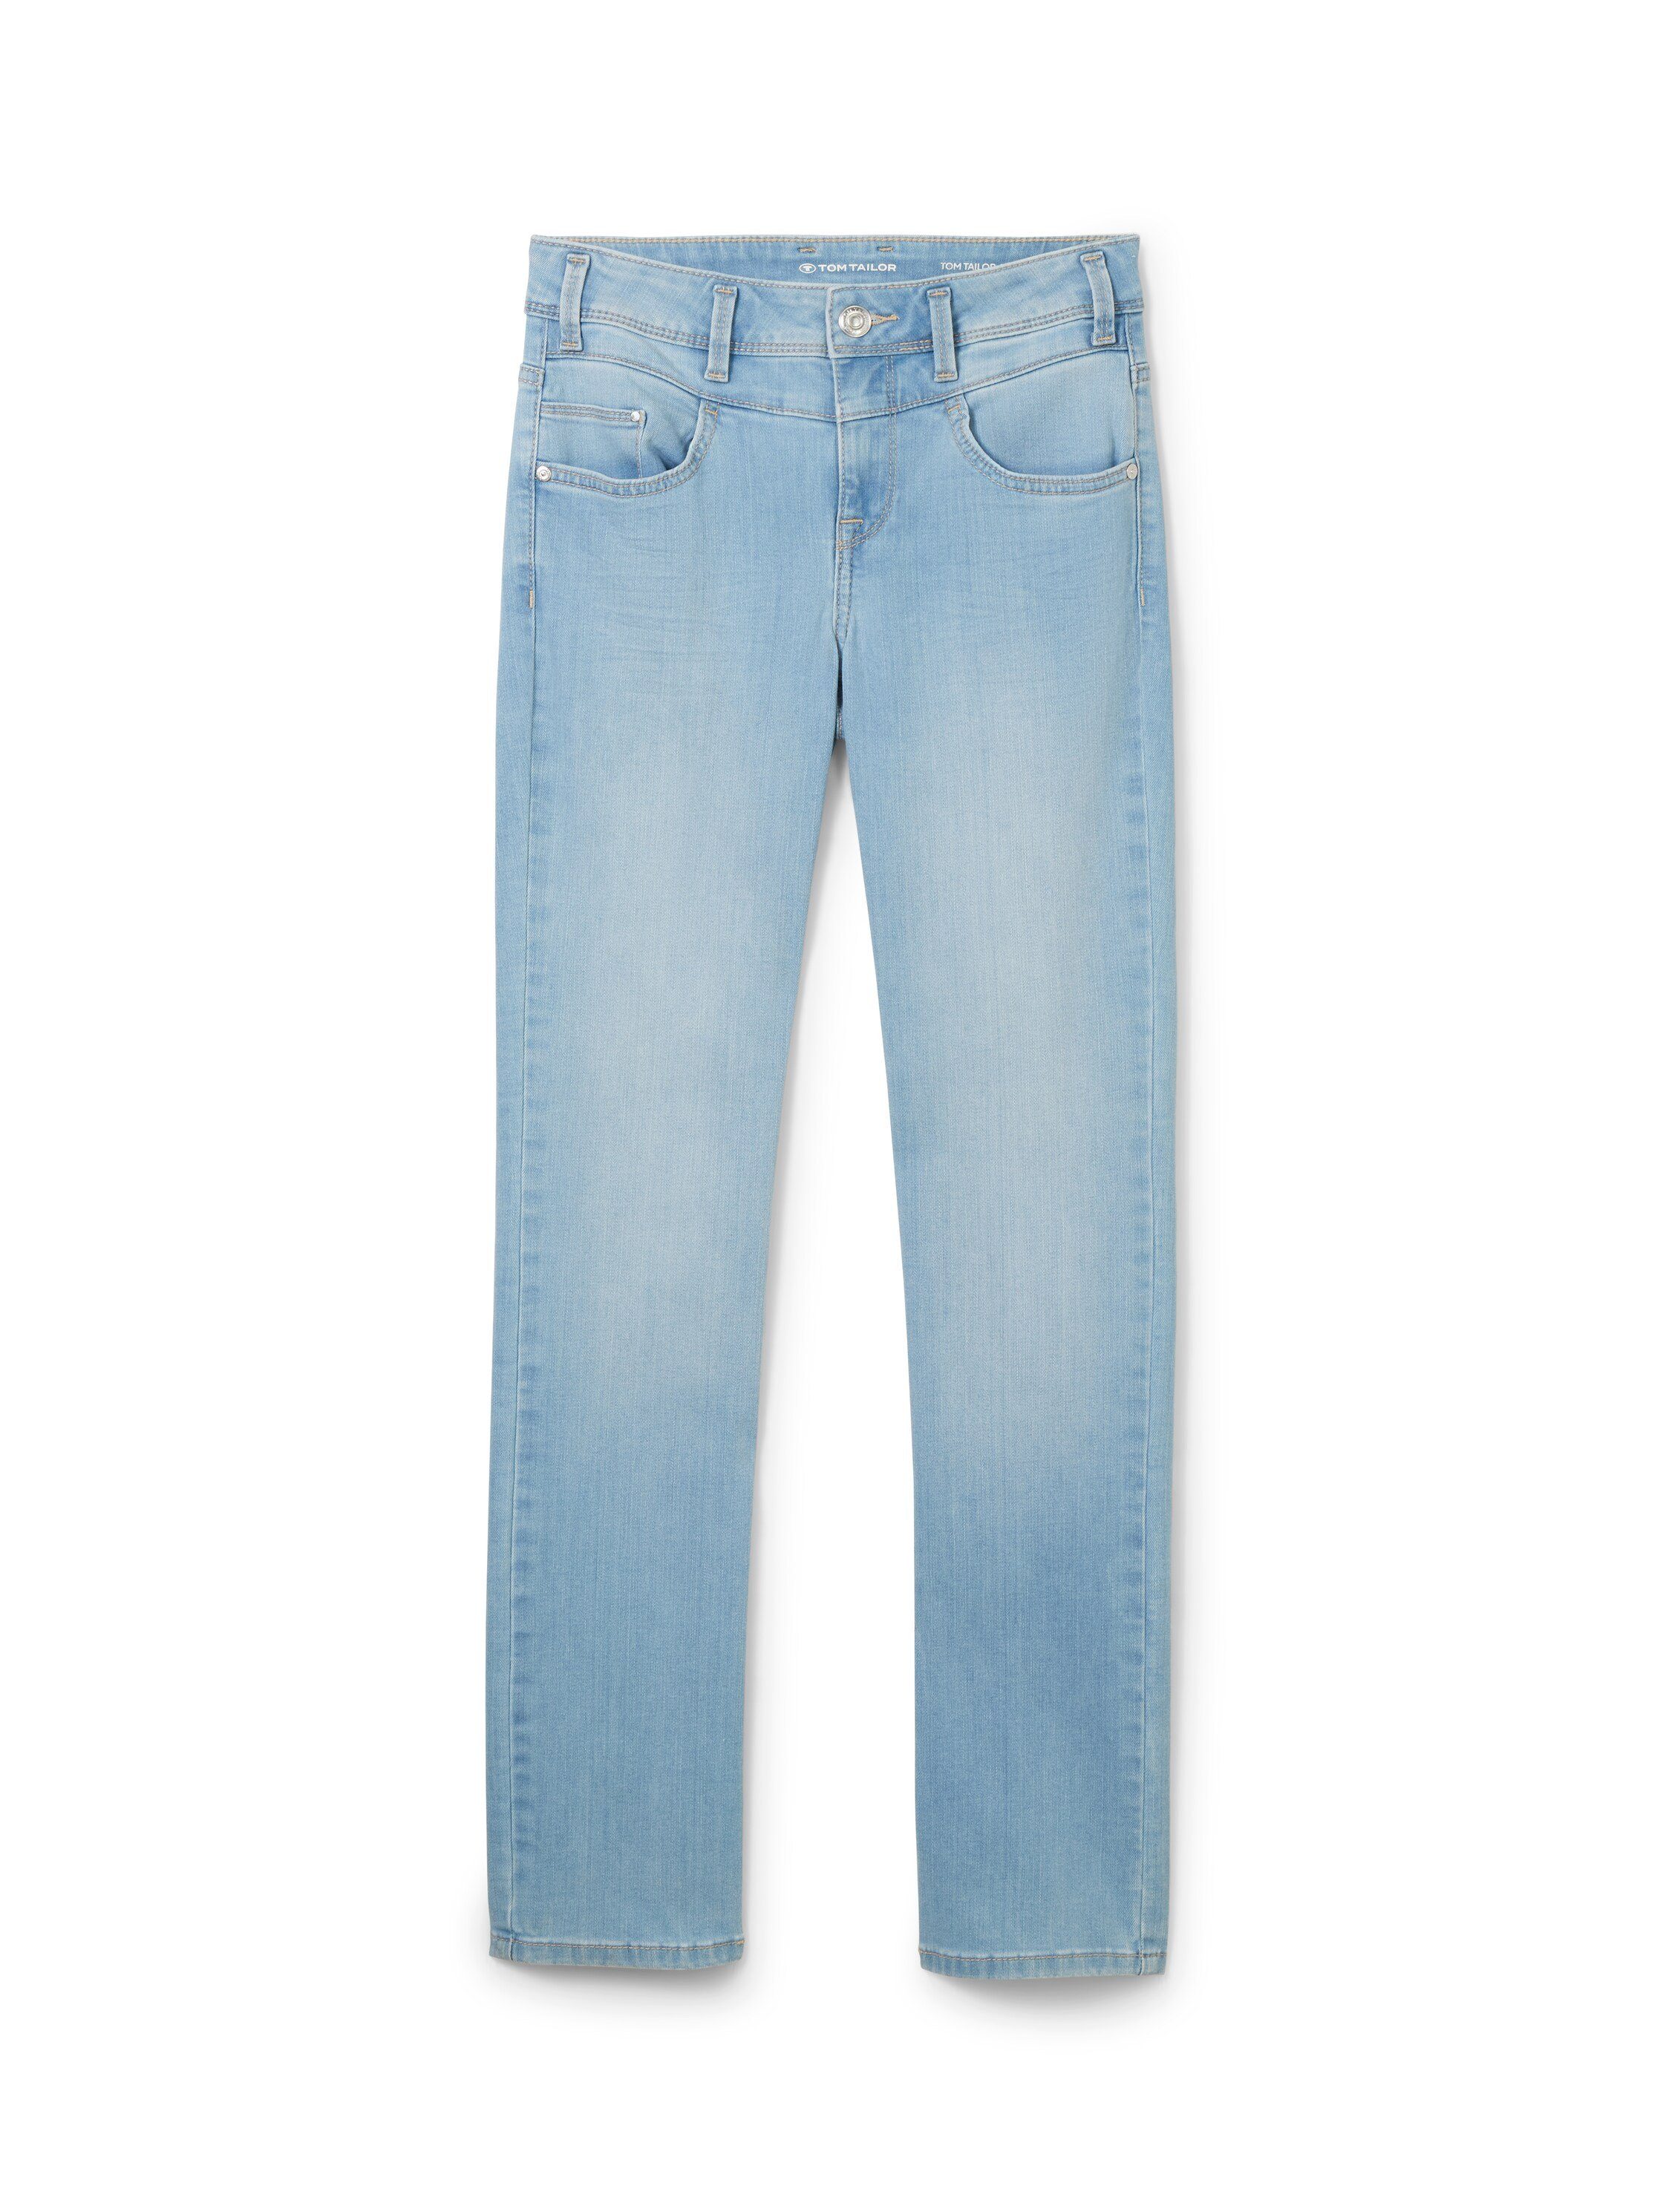 Tom Tailor 5-pocket jeans Alexa straight